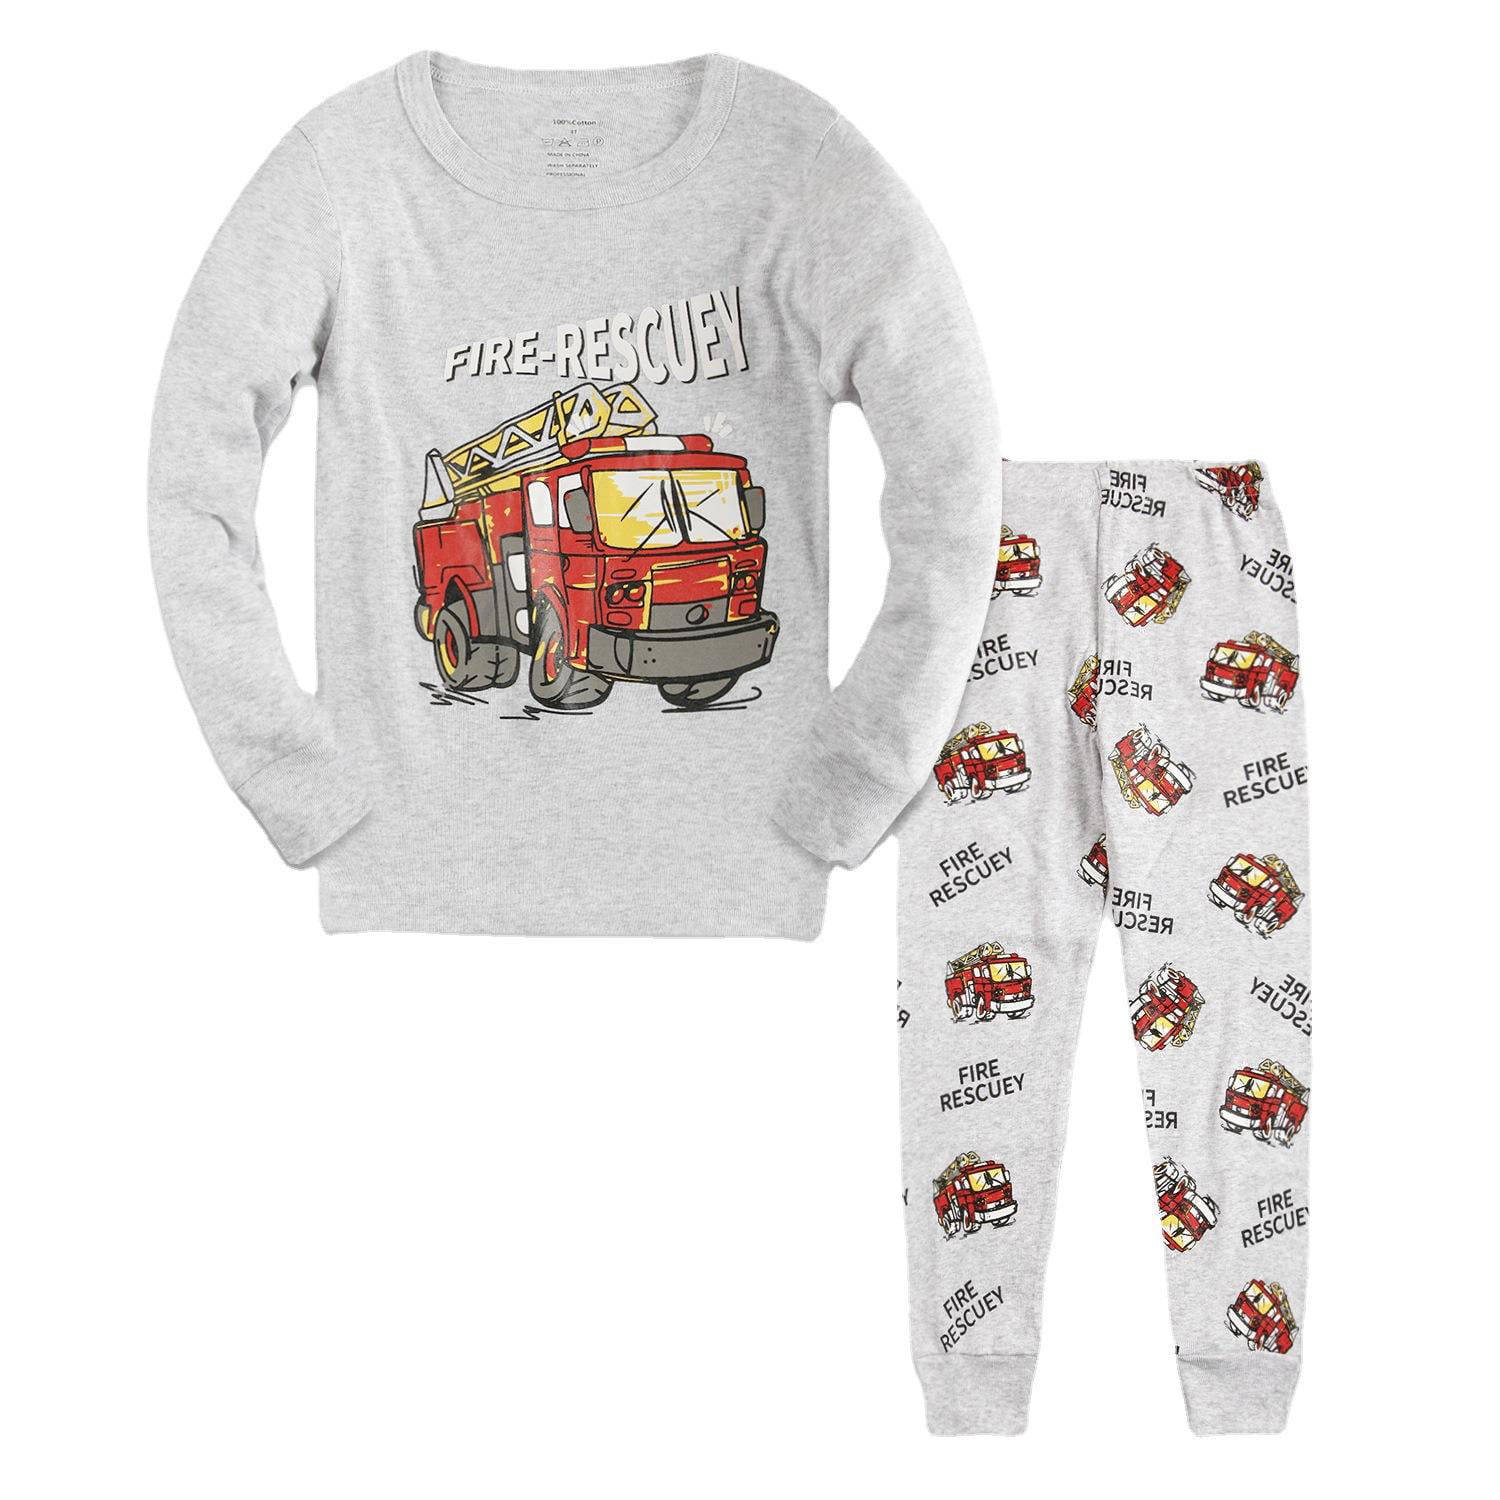 Boys Short sleeve pajamas set 2T-7T Cartoon vehicle pattern nightwear sleepwear